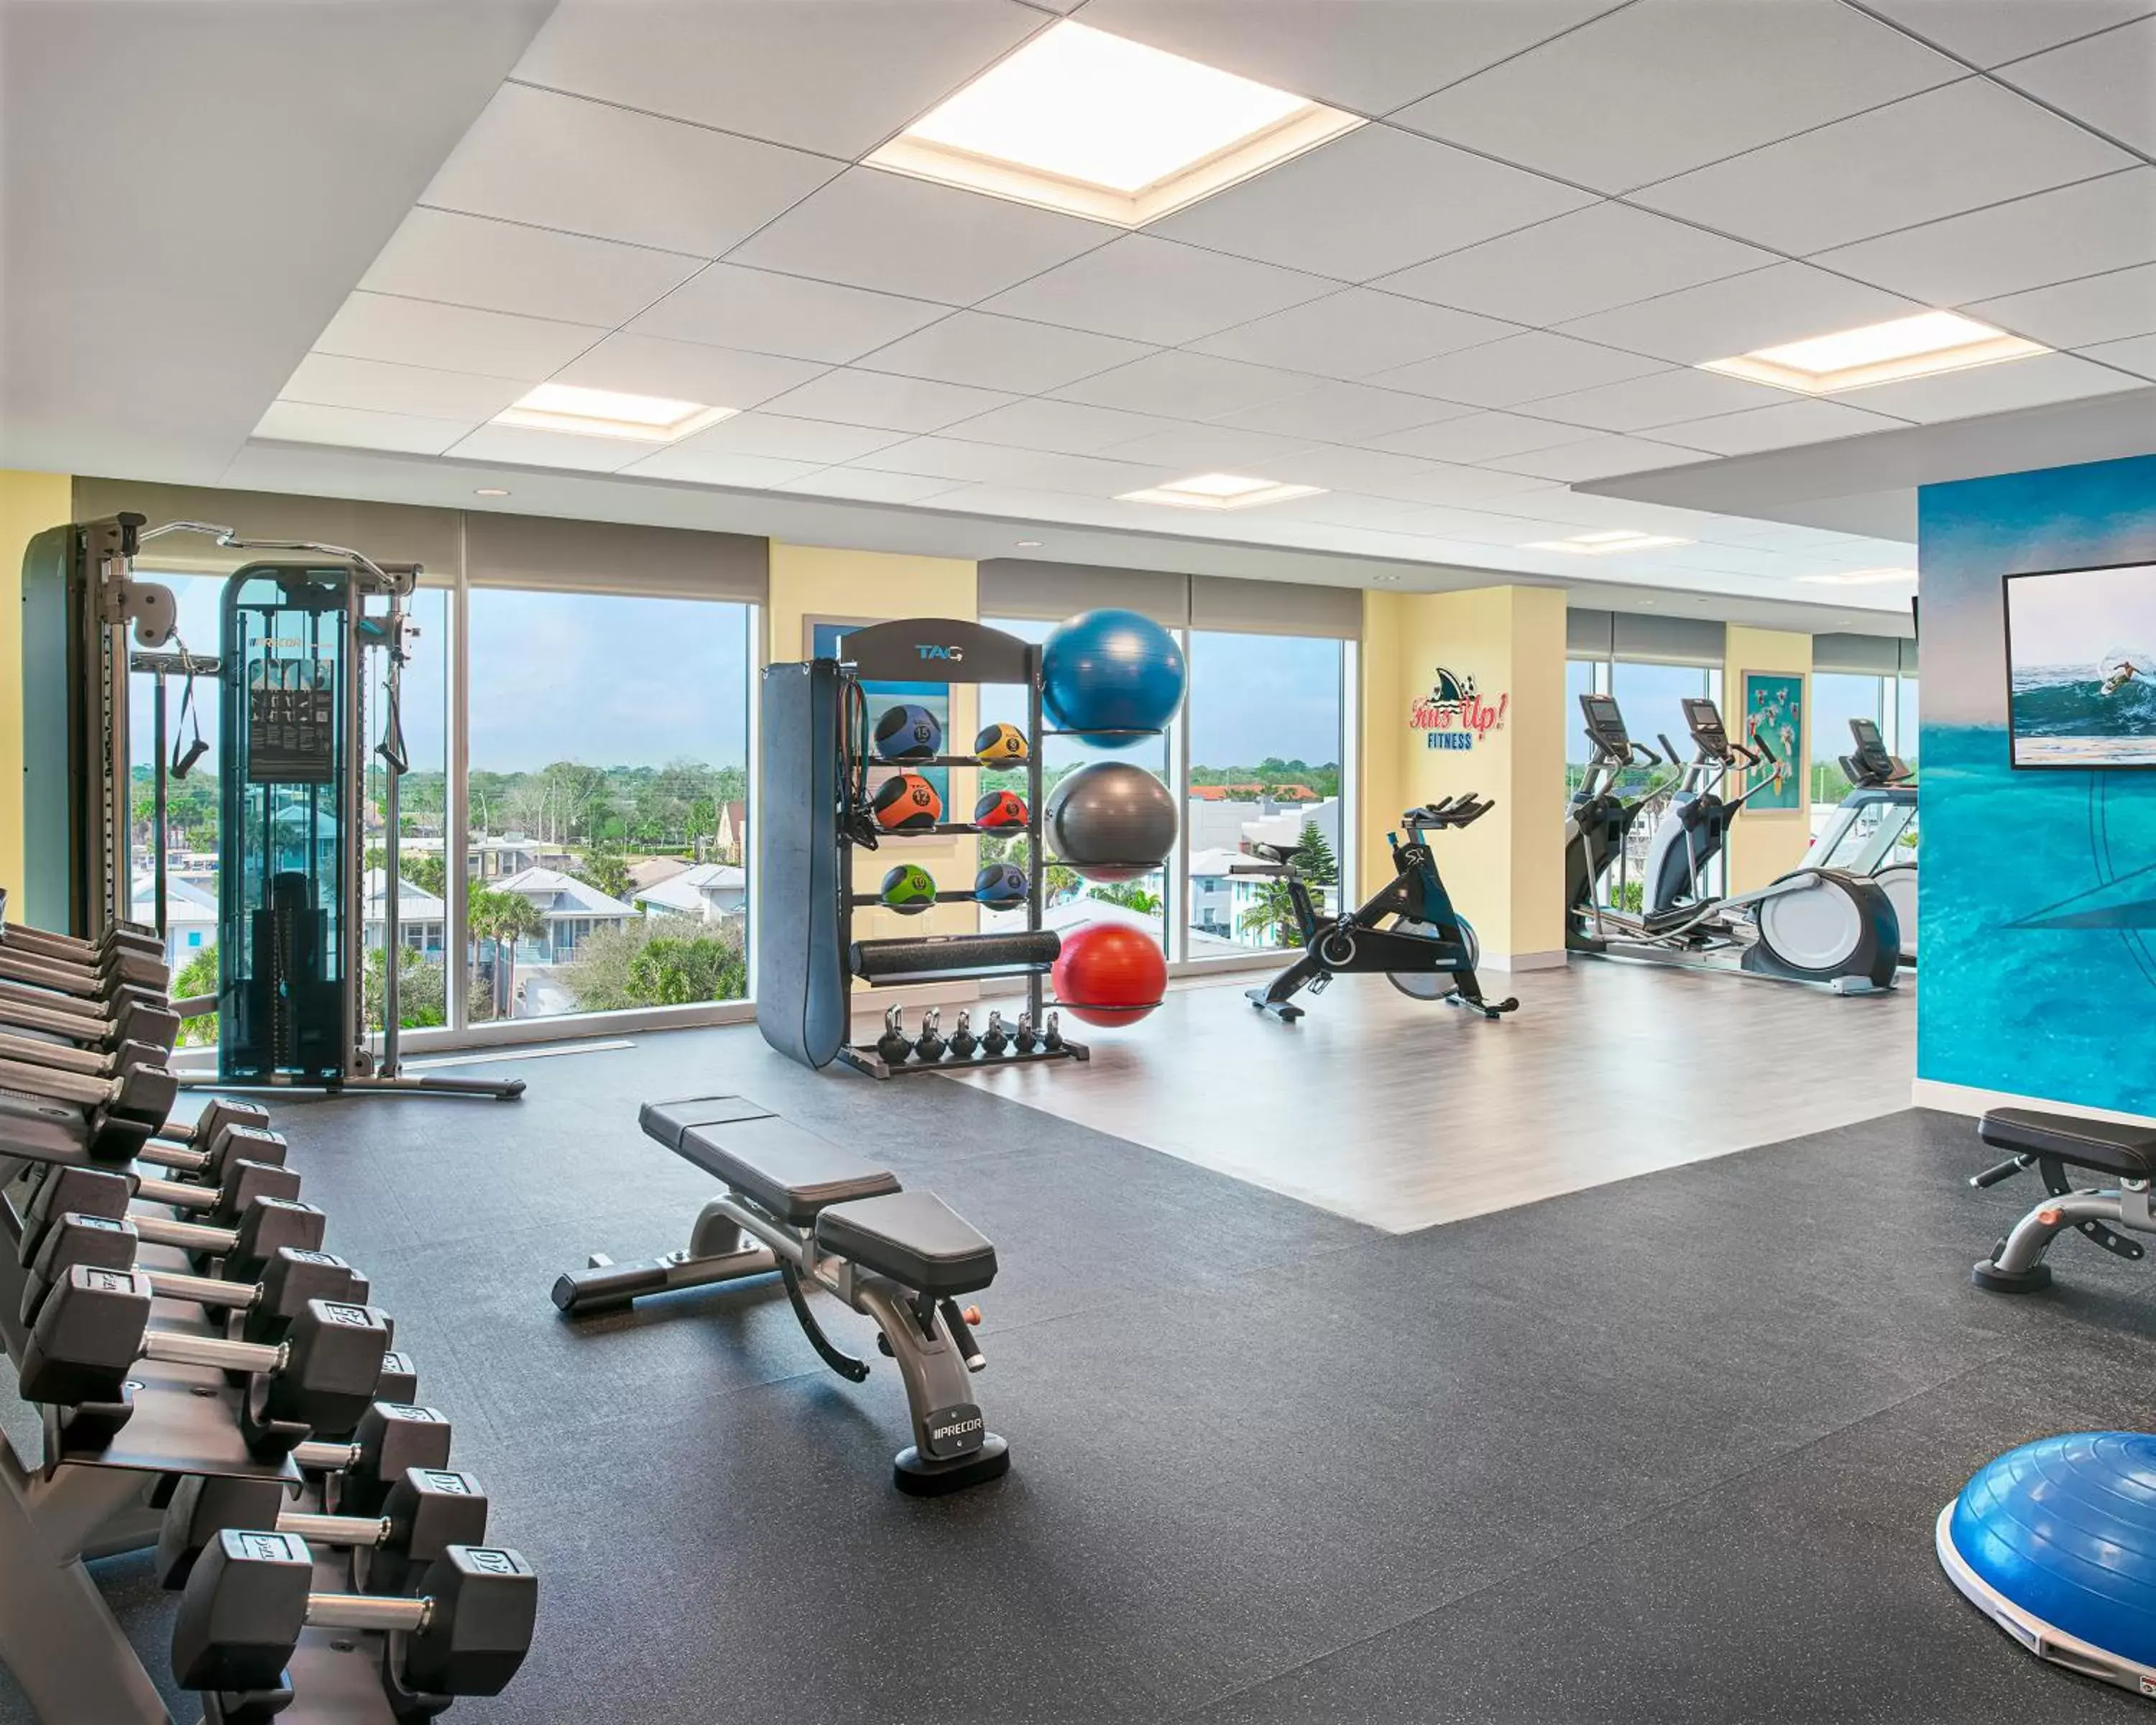 Fitness centre/facilities, Fitness Center/Facilities in Margaritaville Jacksonville Beach